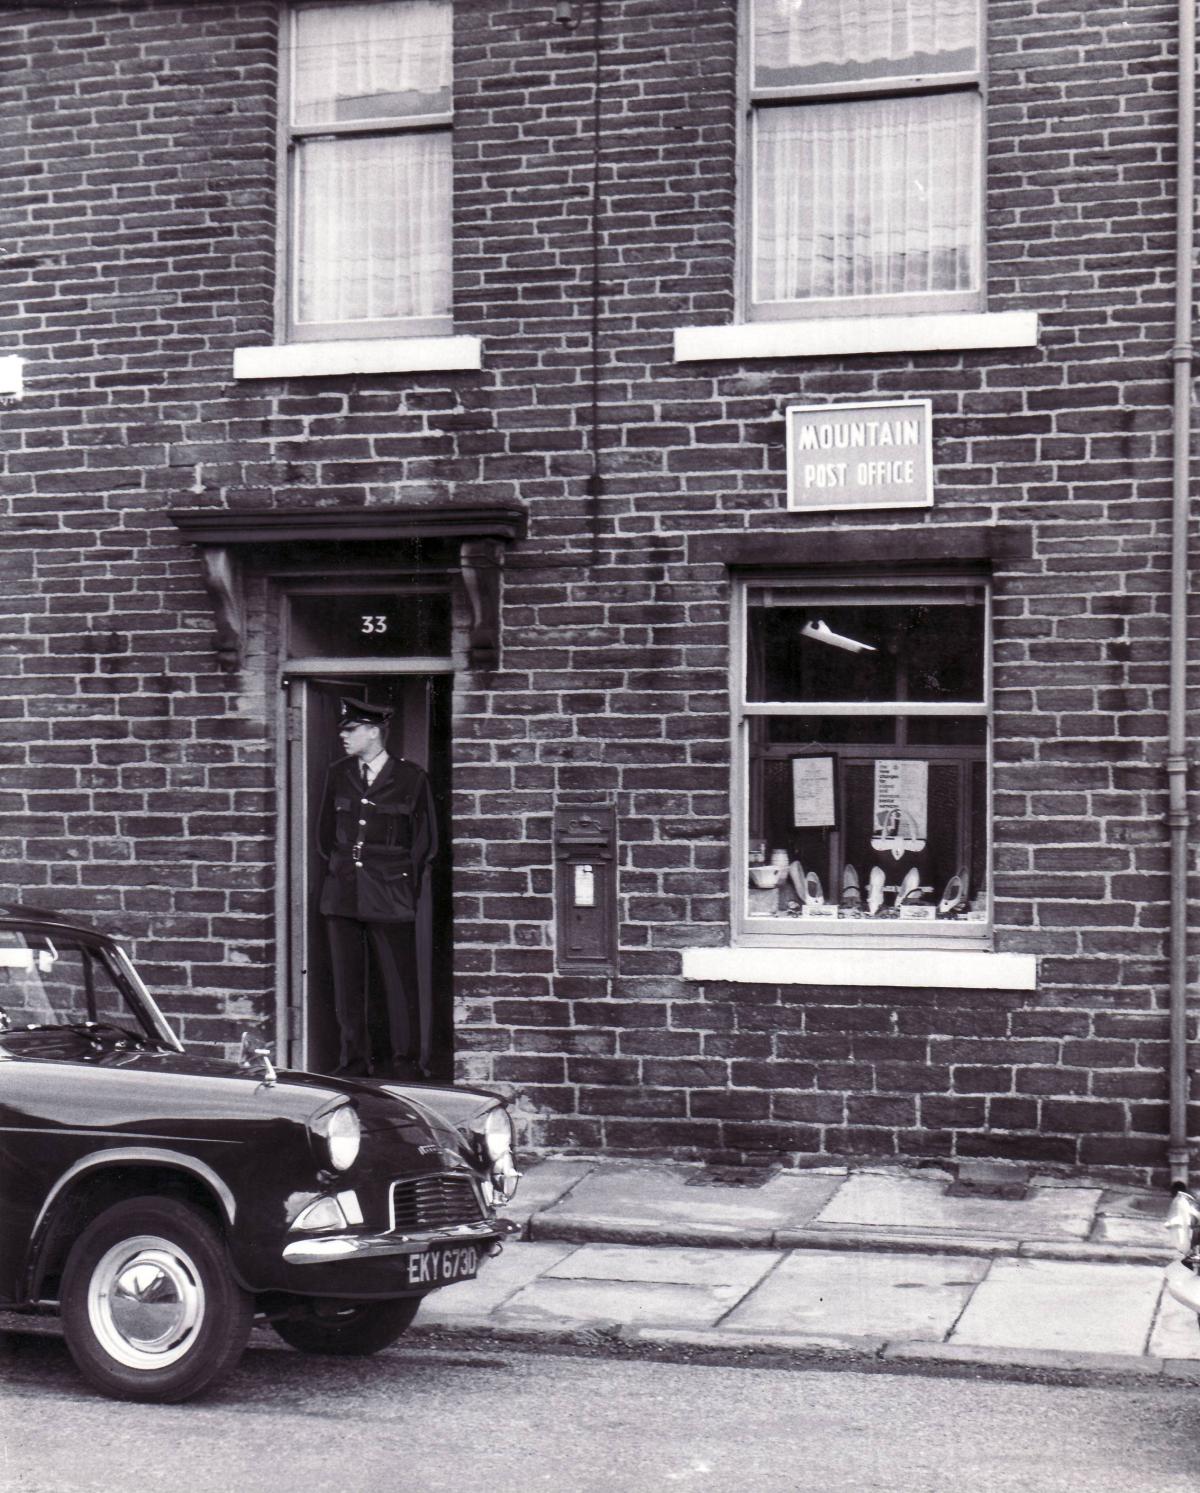 Queensbury Mountain Post Office 1966